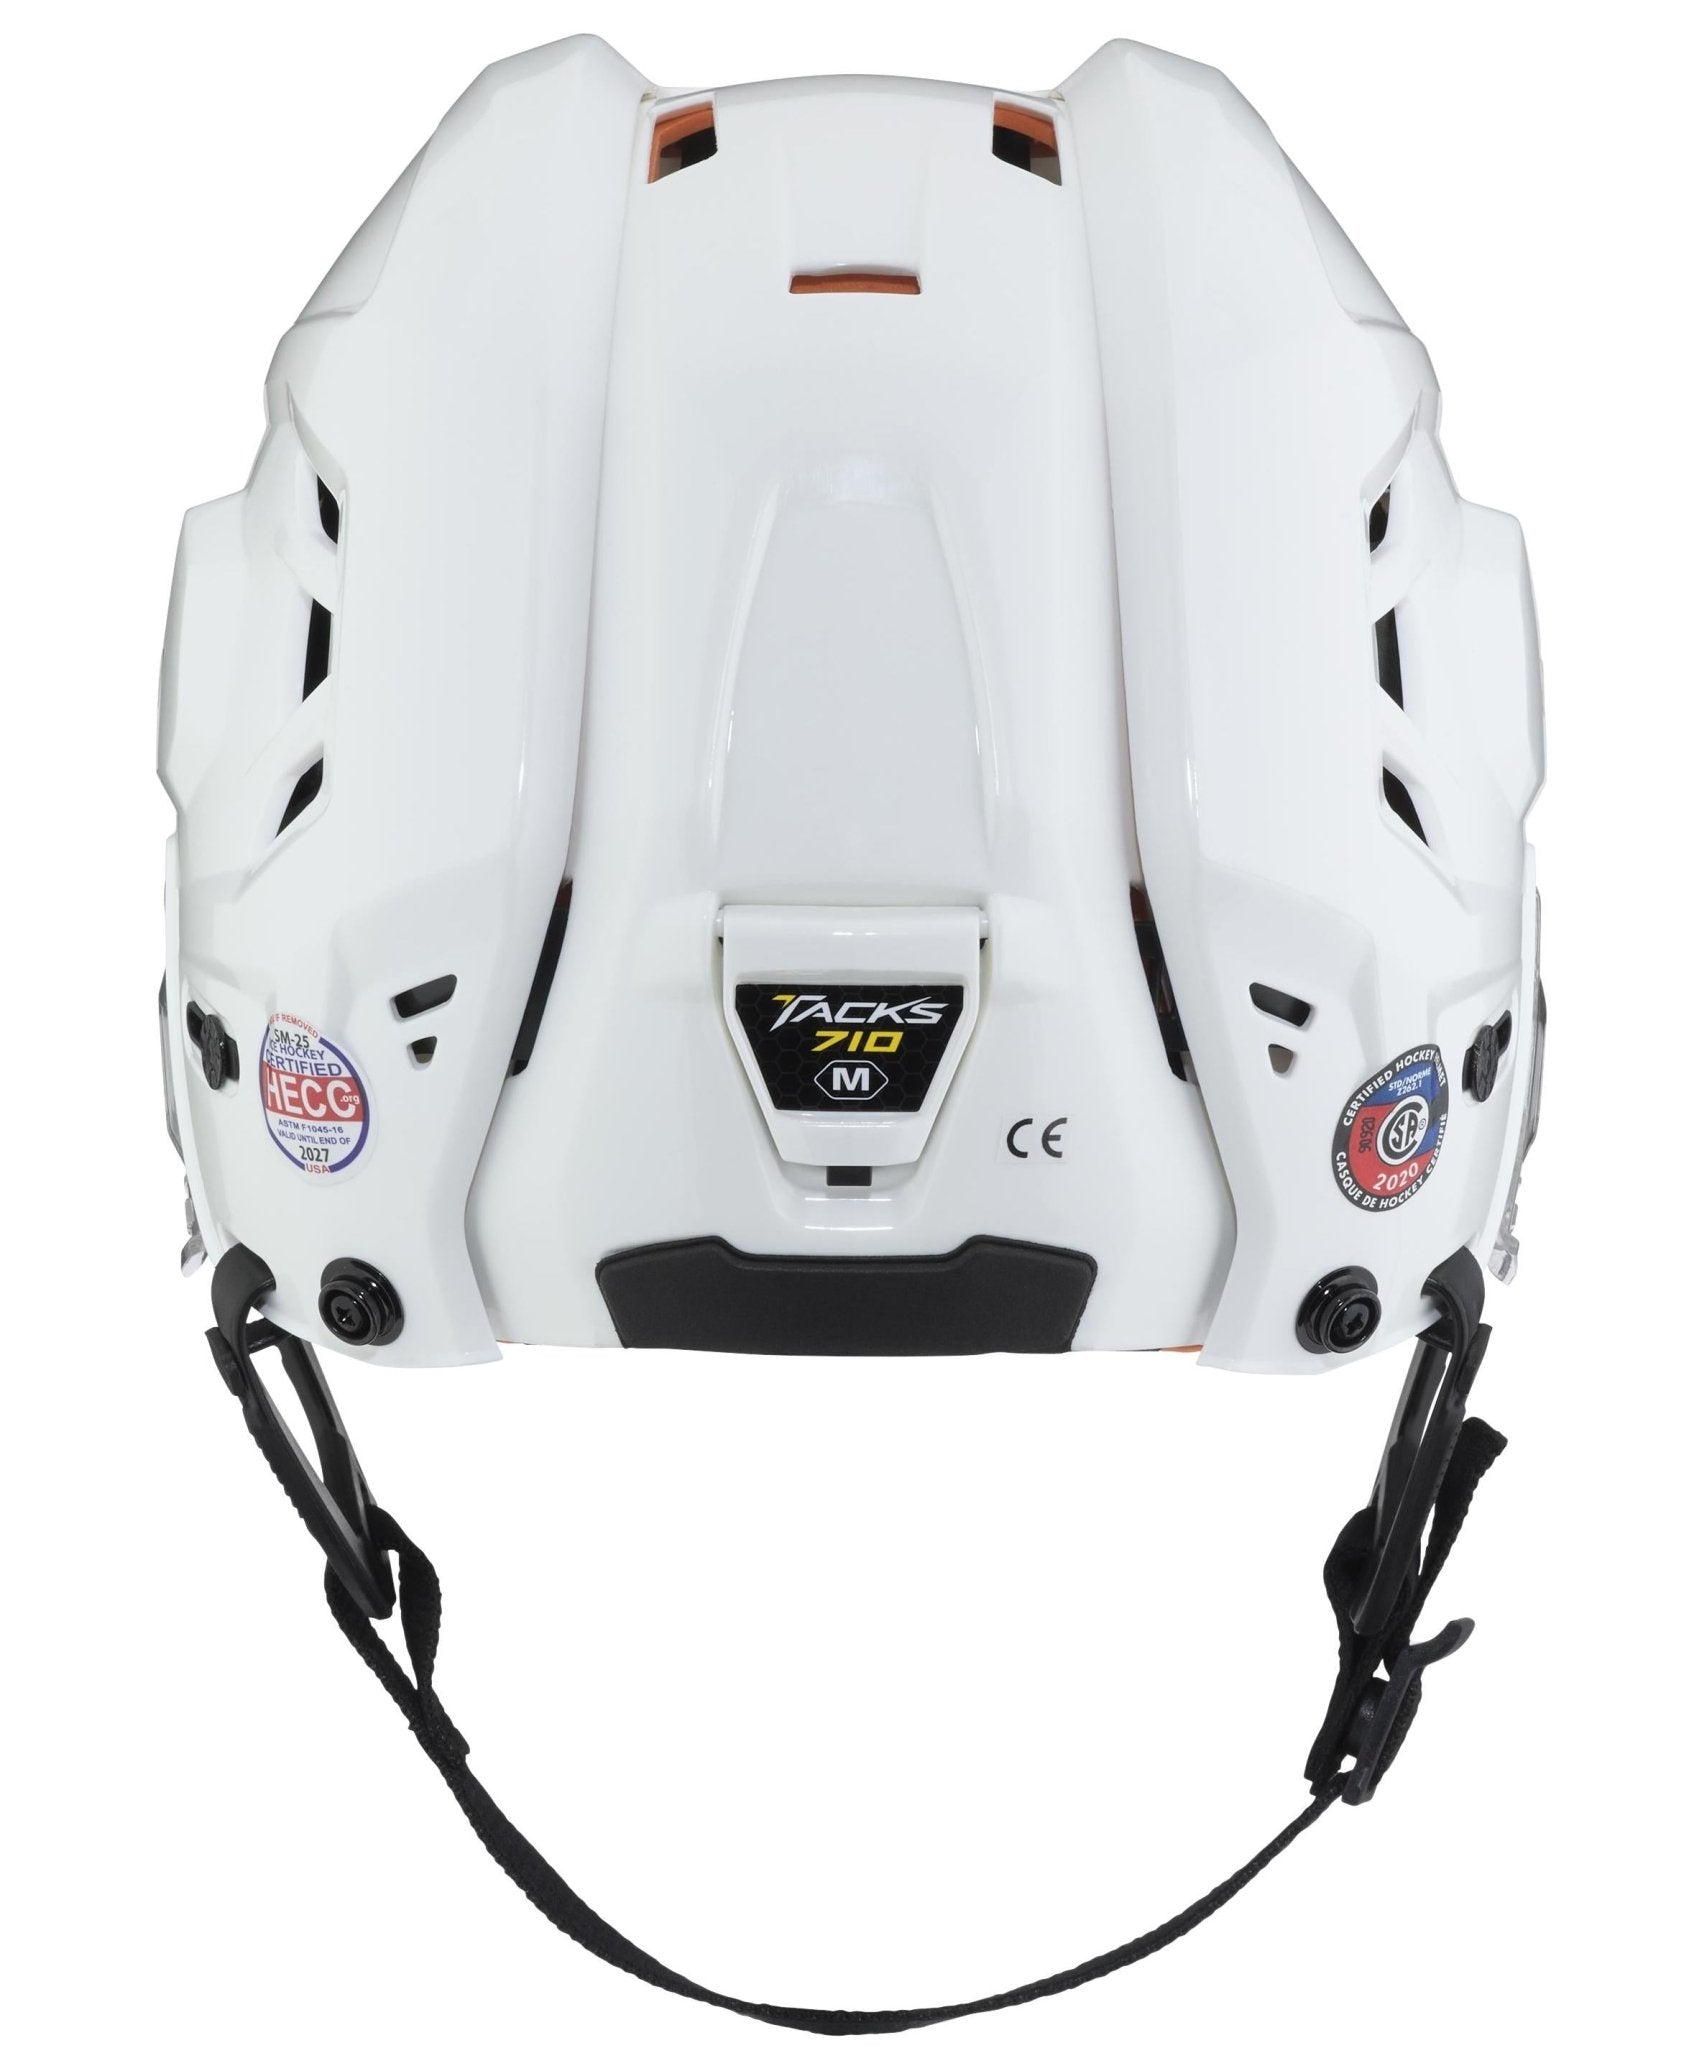 Helm CCM Tacks 710 Combo 20.77008 WEISS - thehockeyshop.ch